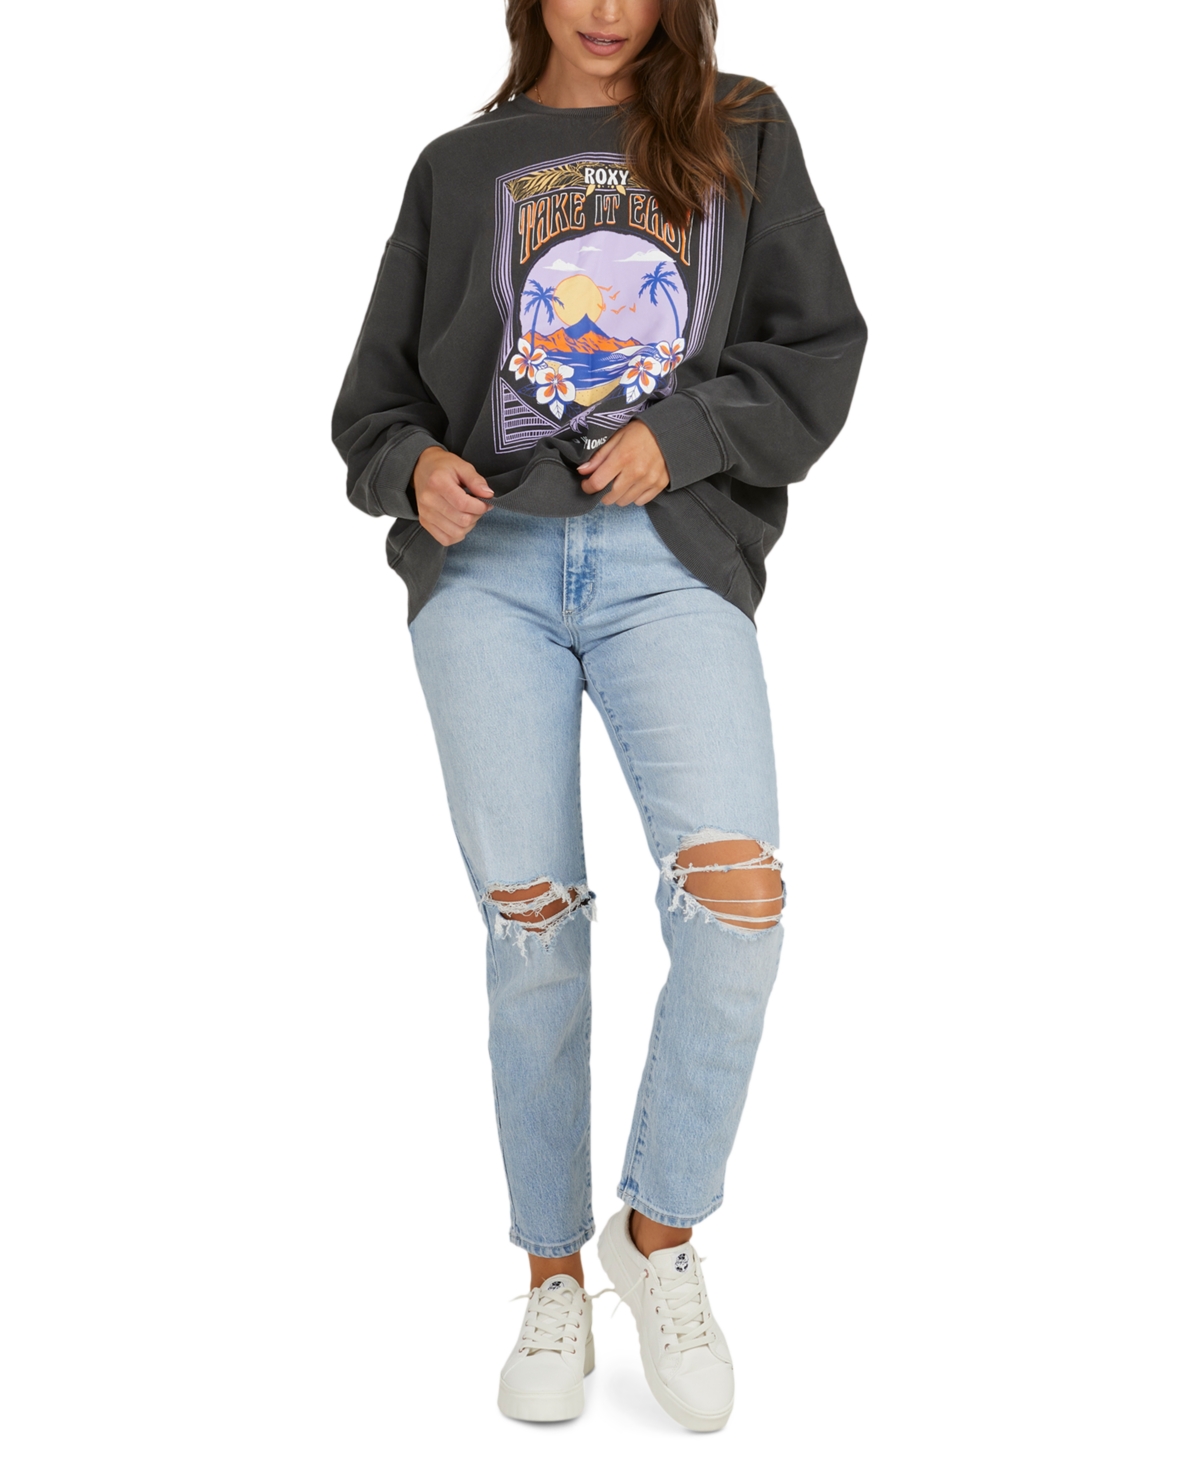  Roxy Juniors' Into The Night Graphic Crewneck Sweatshirt